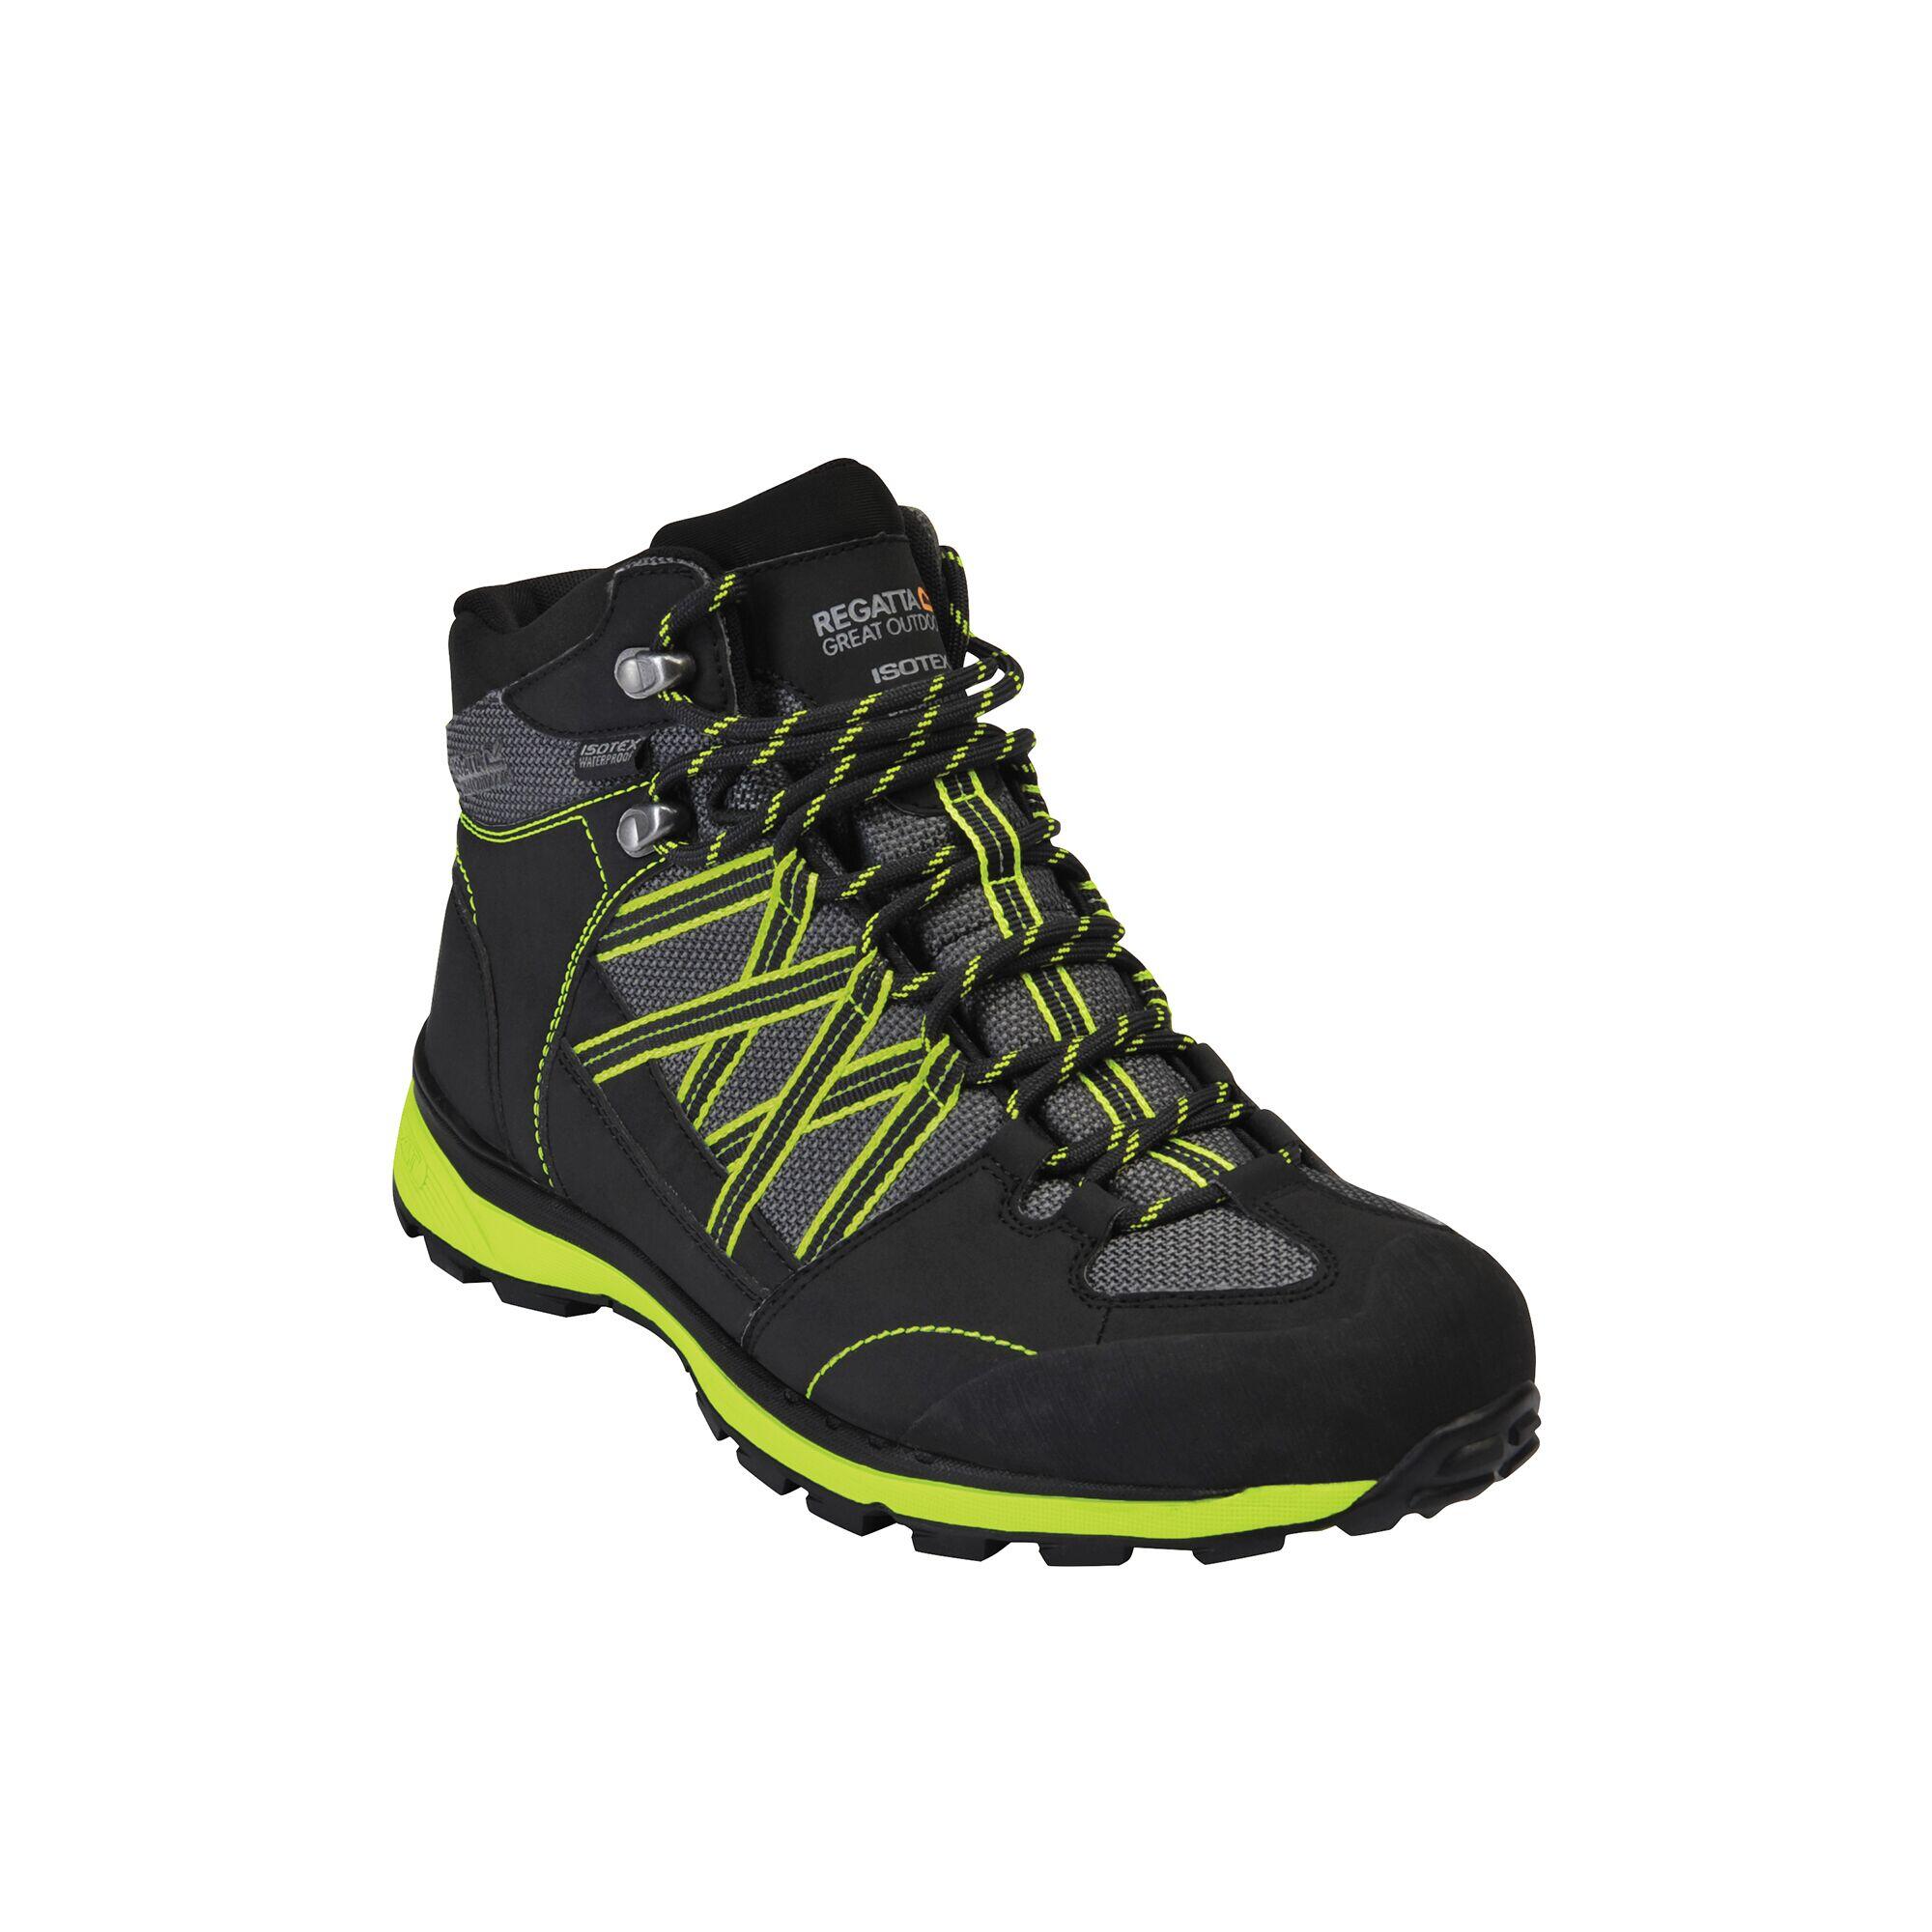 REGATTA Samaris II Men's Hiking Boots - Black/Light Green